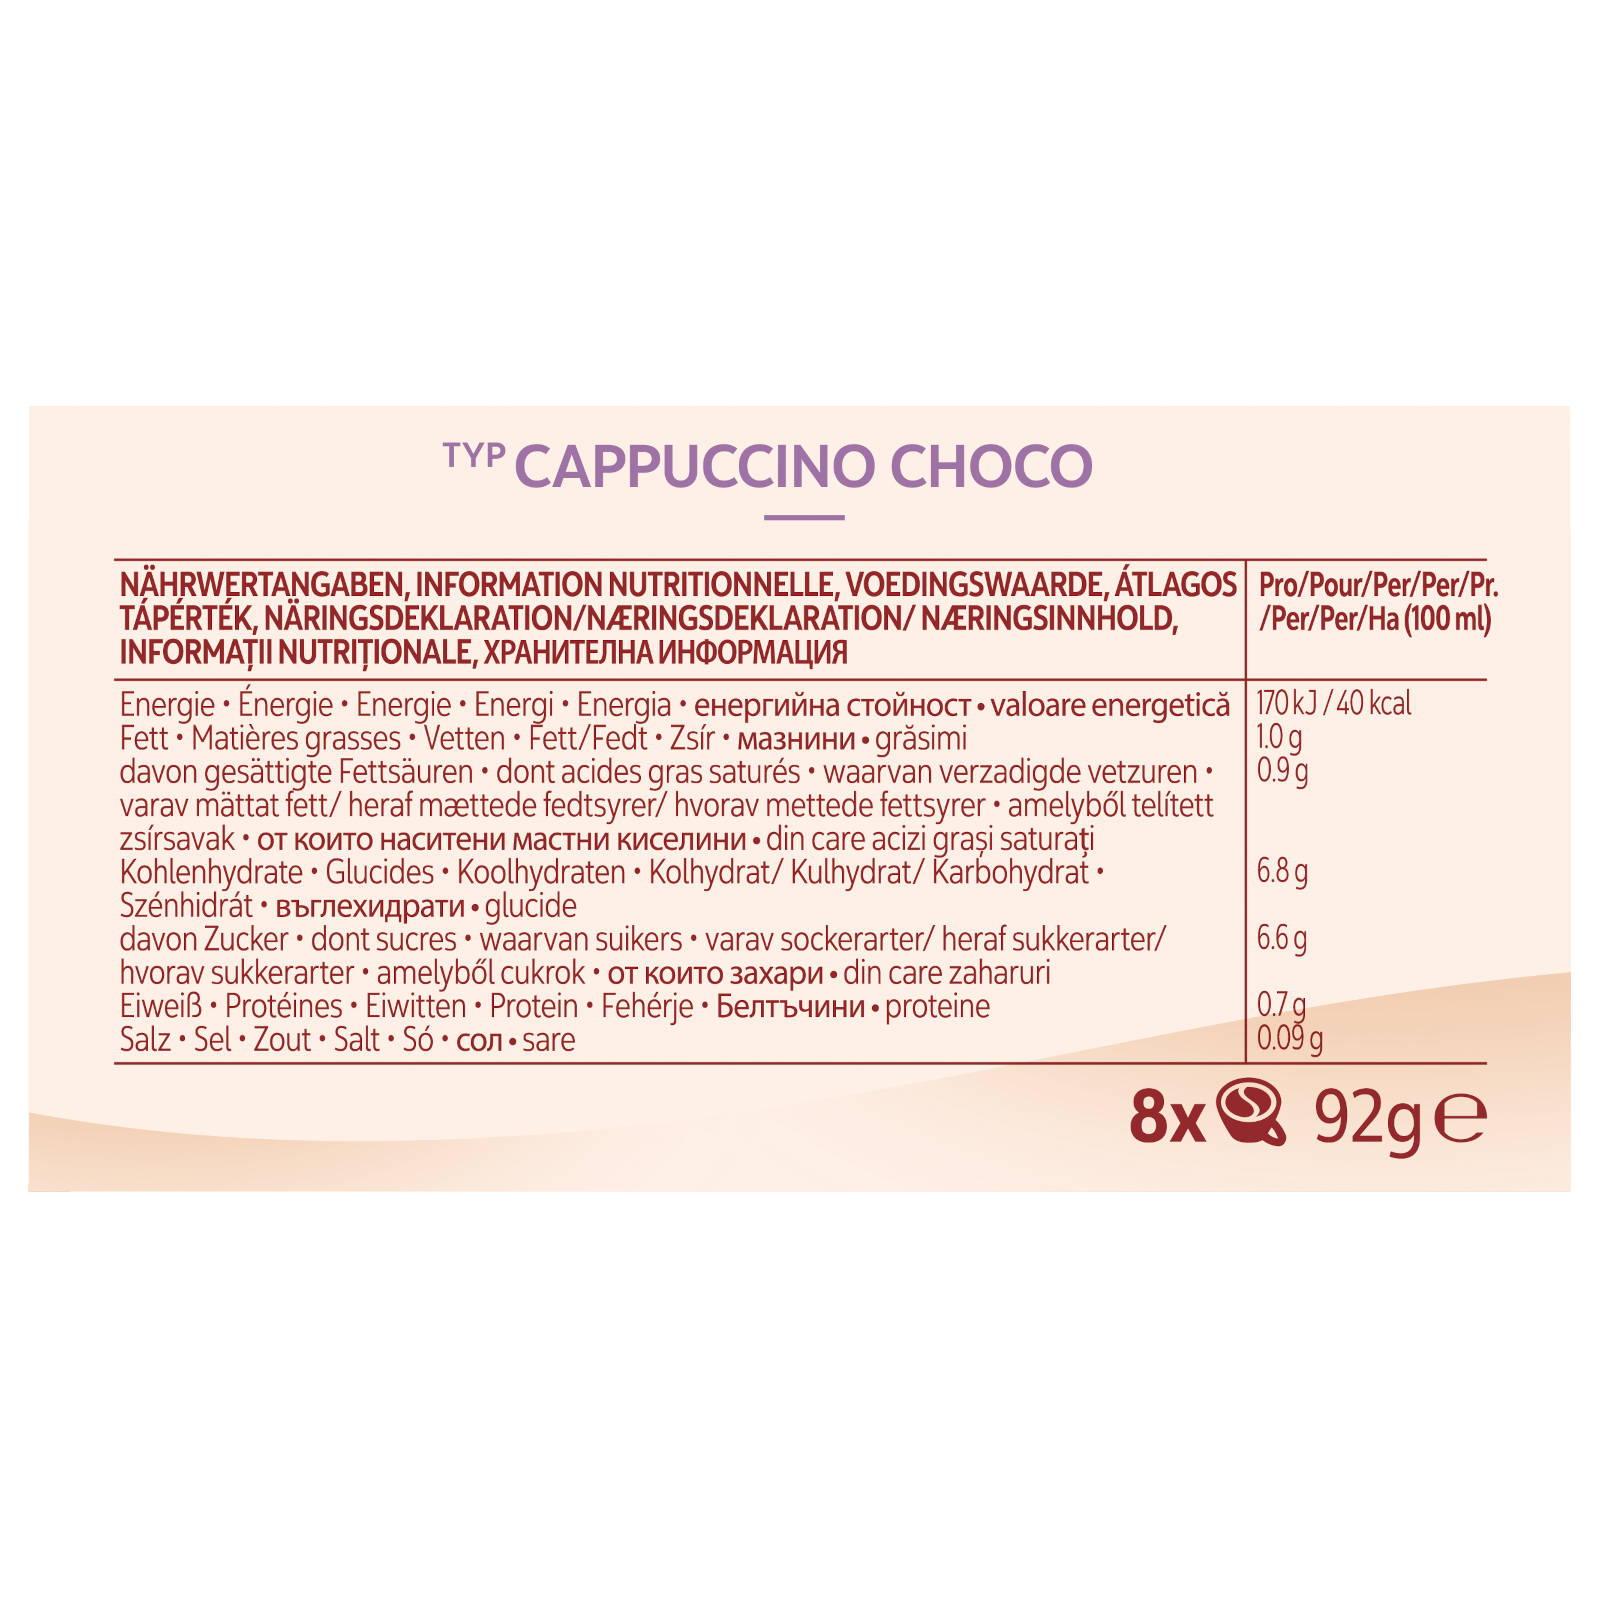 SENSEO Typ Cappuccino Choco 80 Getränke Pad-Maschine) Soft- Kaffeepads (Senseo